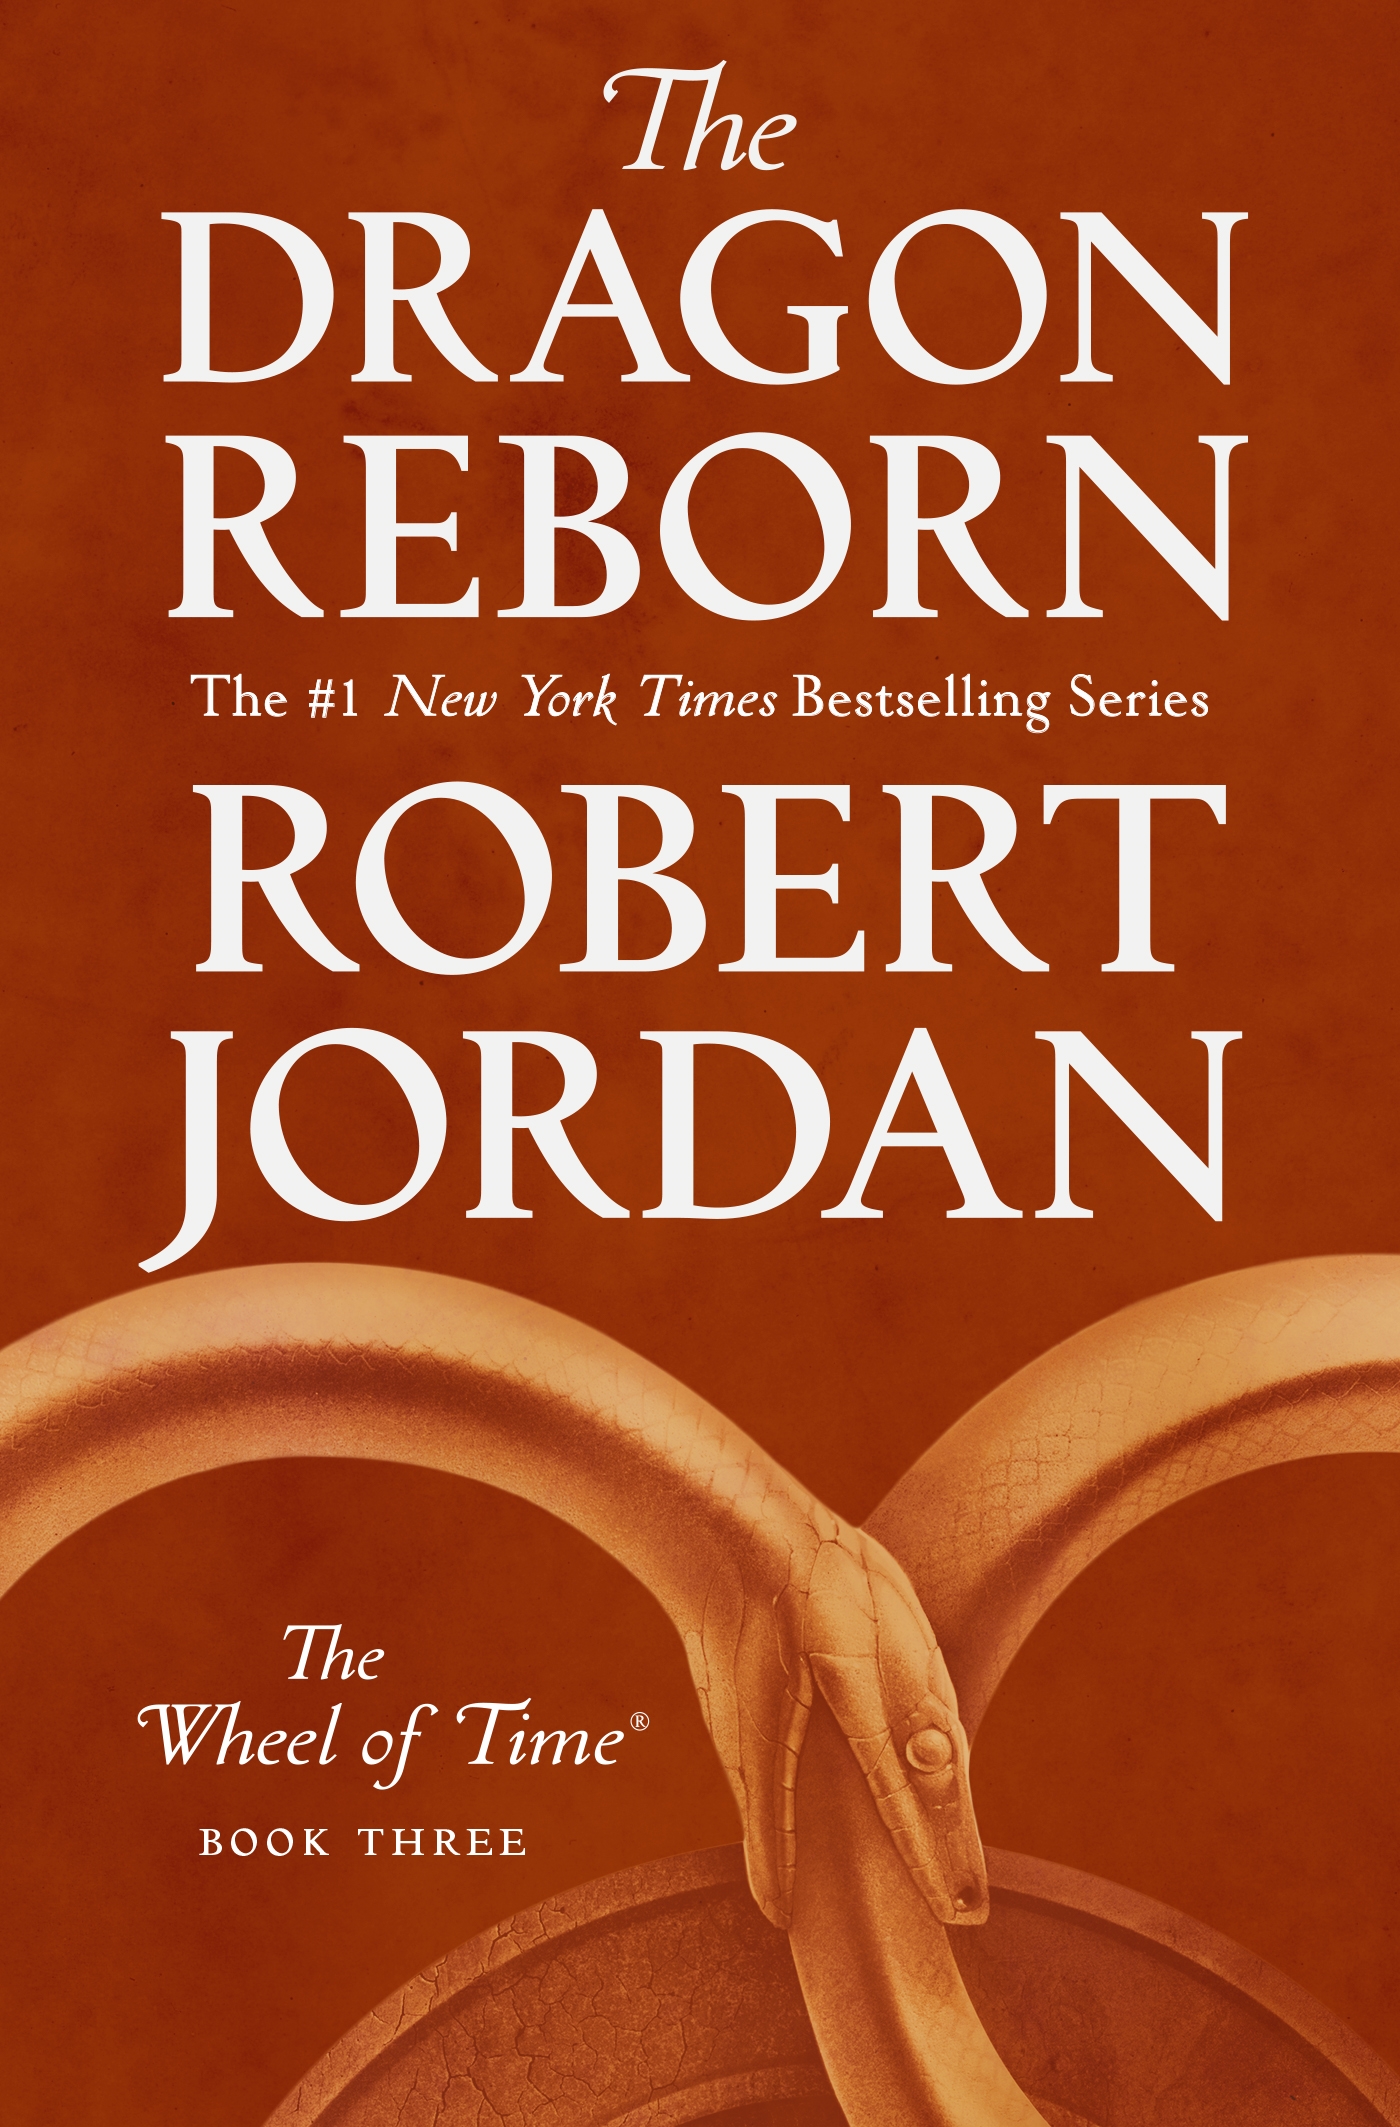 Book “The Dragon Reborn” by Robert Jordan — October 29, 2019